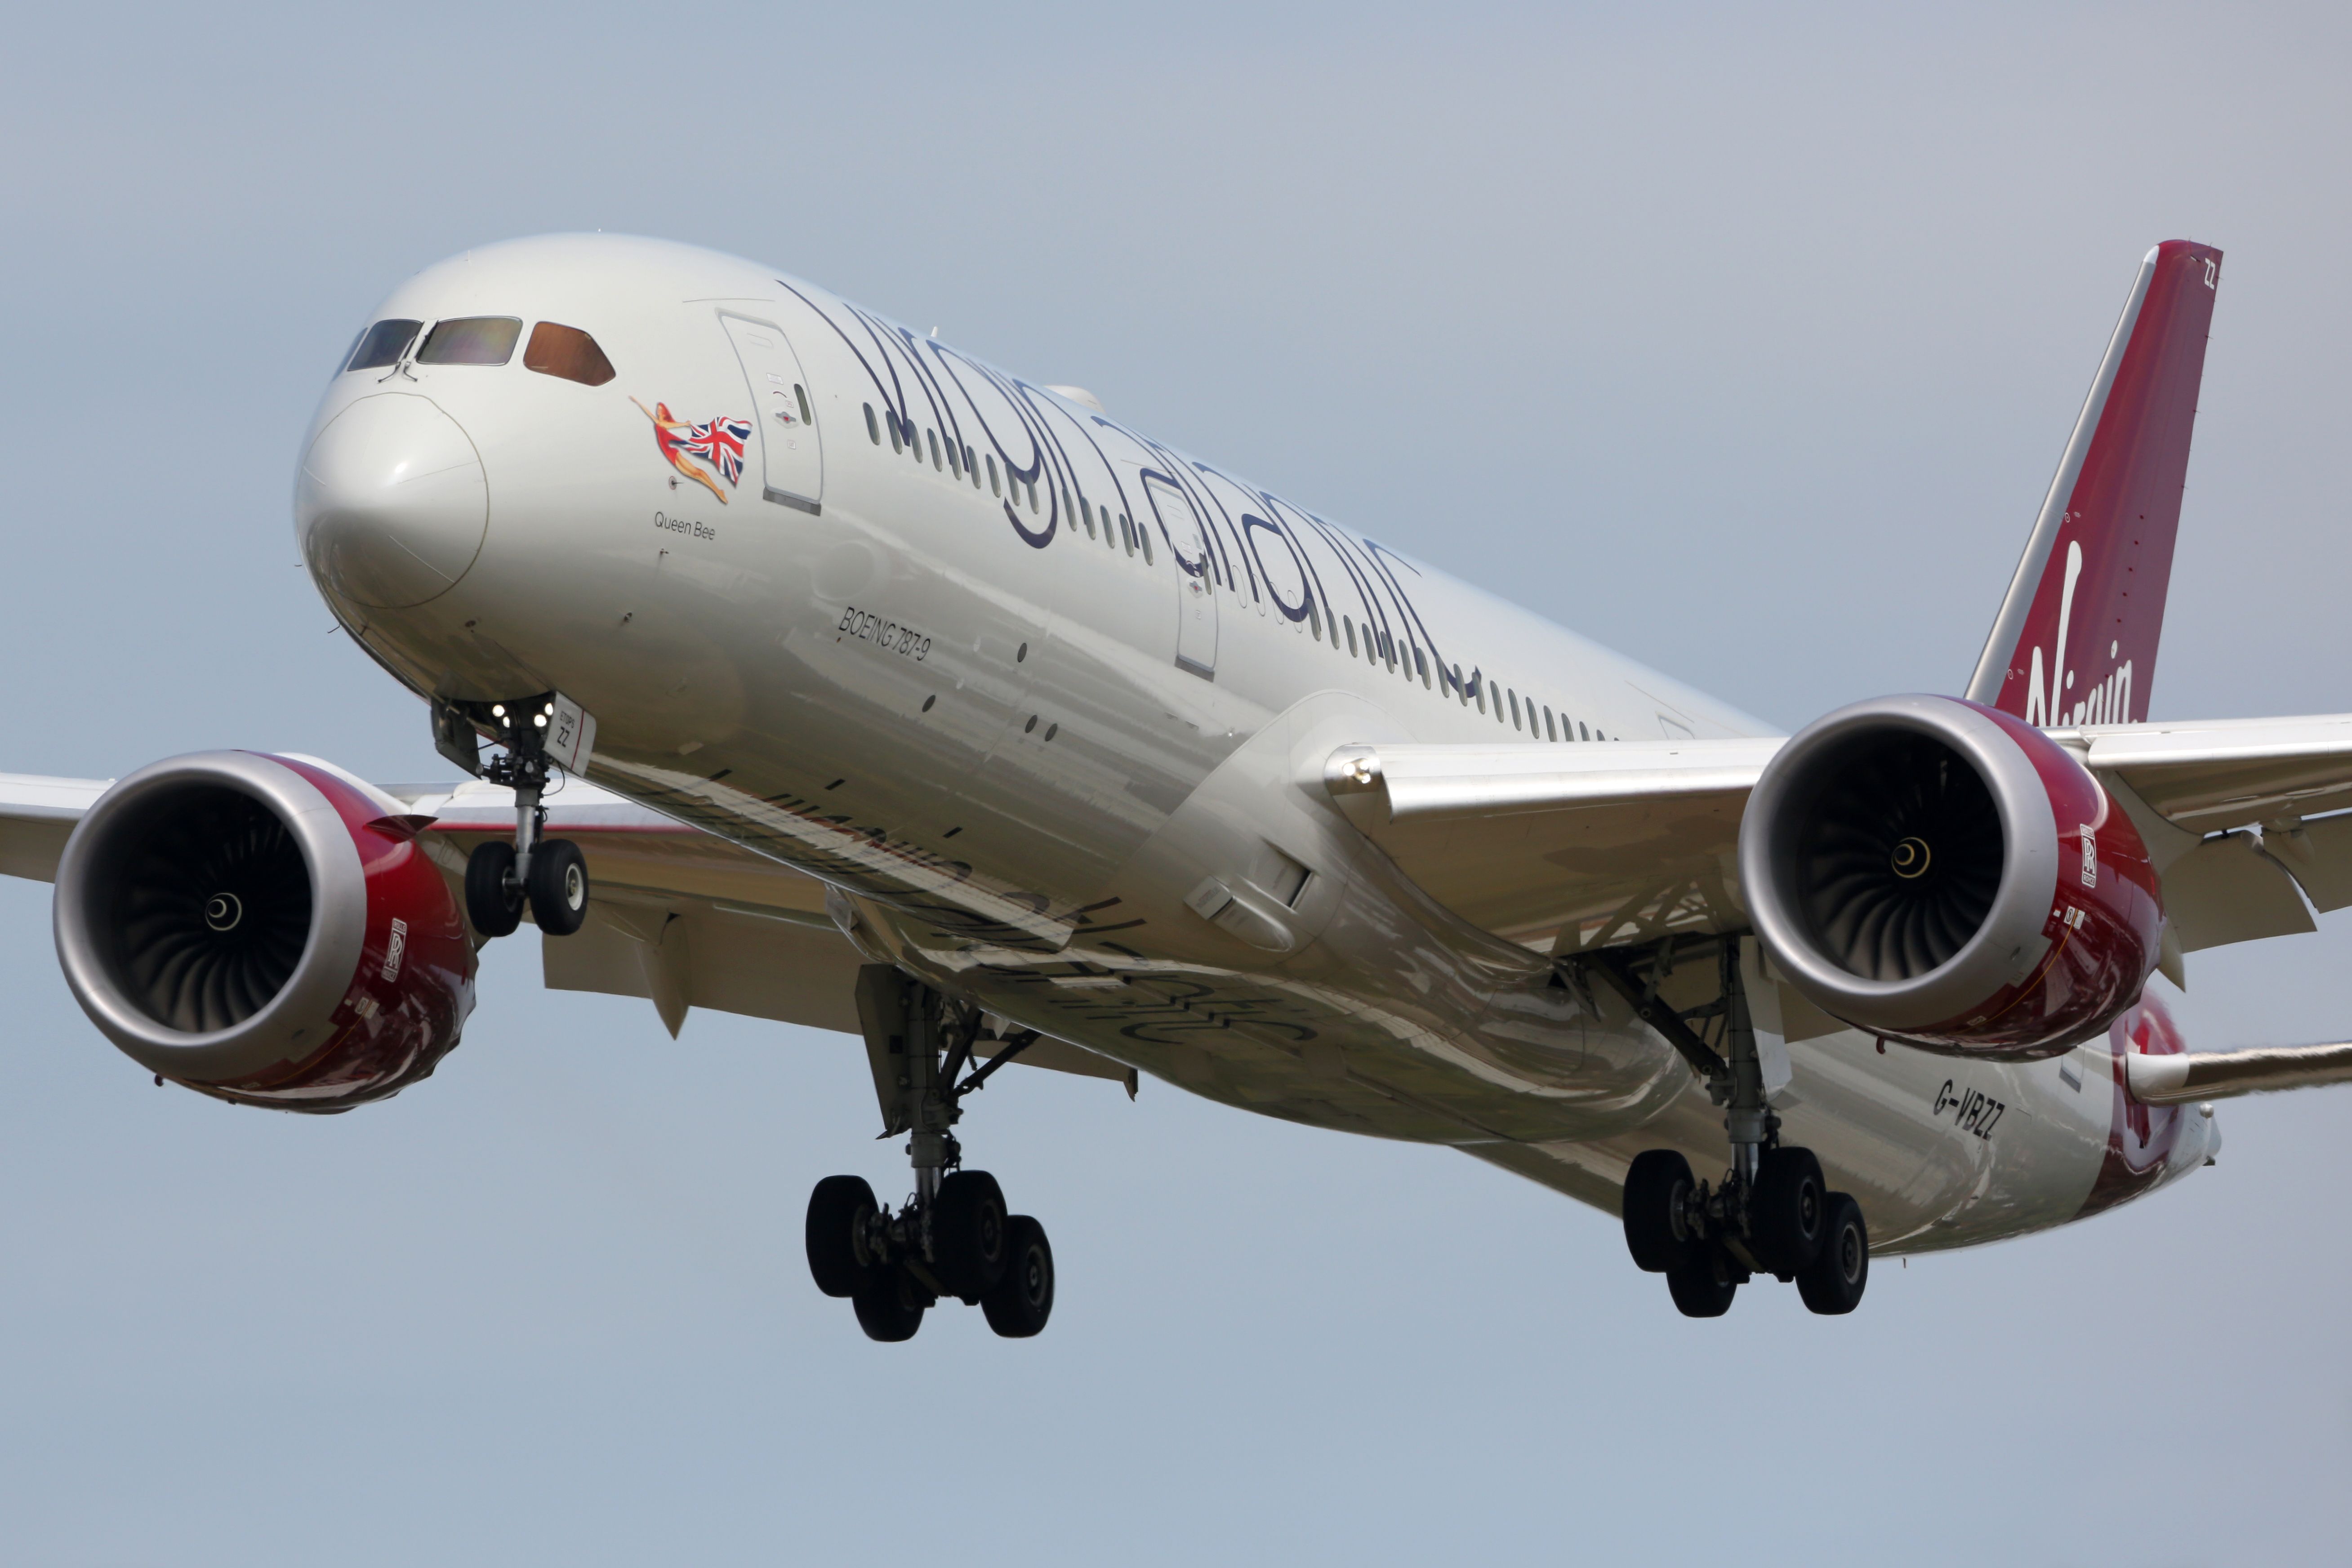 Virgin Atlantic Boeing 787-9 landing at London Heathrow Airport